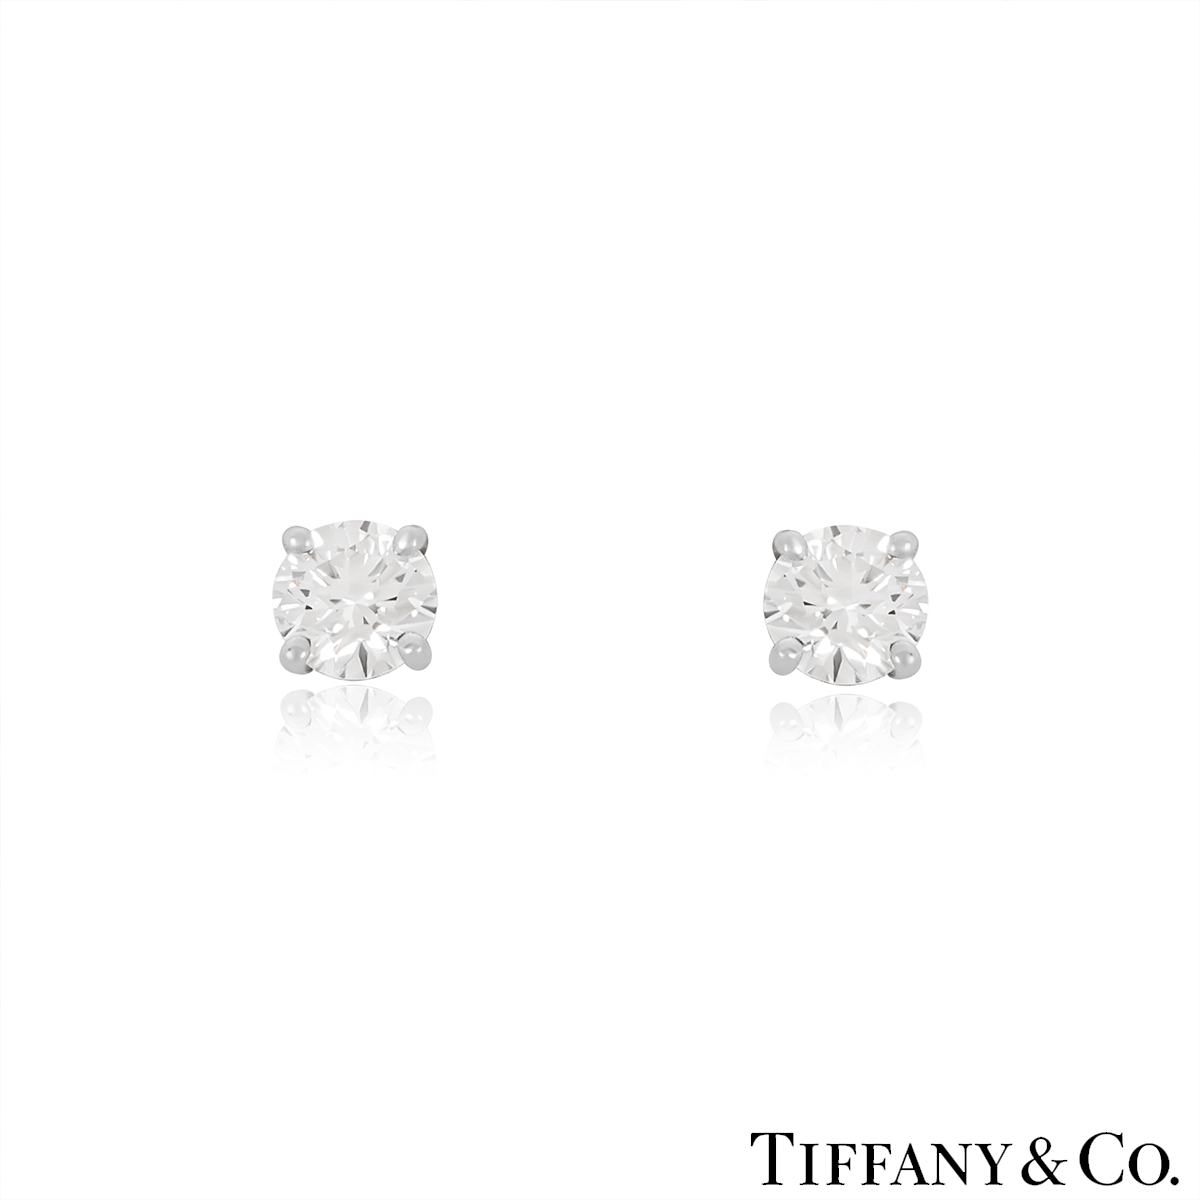 Tiffany  Co Diamond Studs 1 Carat I Color VS1 Clarity and 1 Carat I  Color VS2 Clarity  Worlds Best